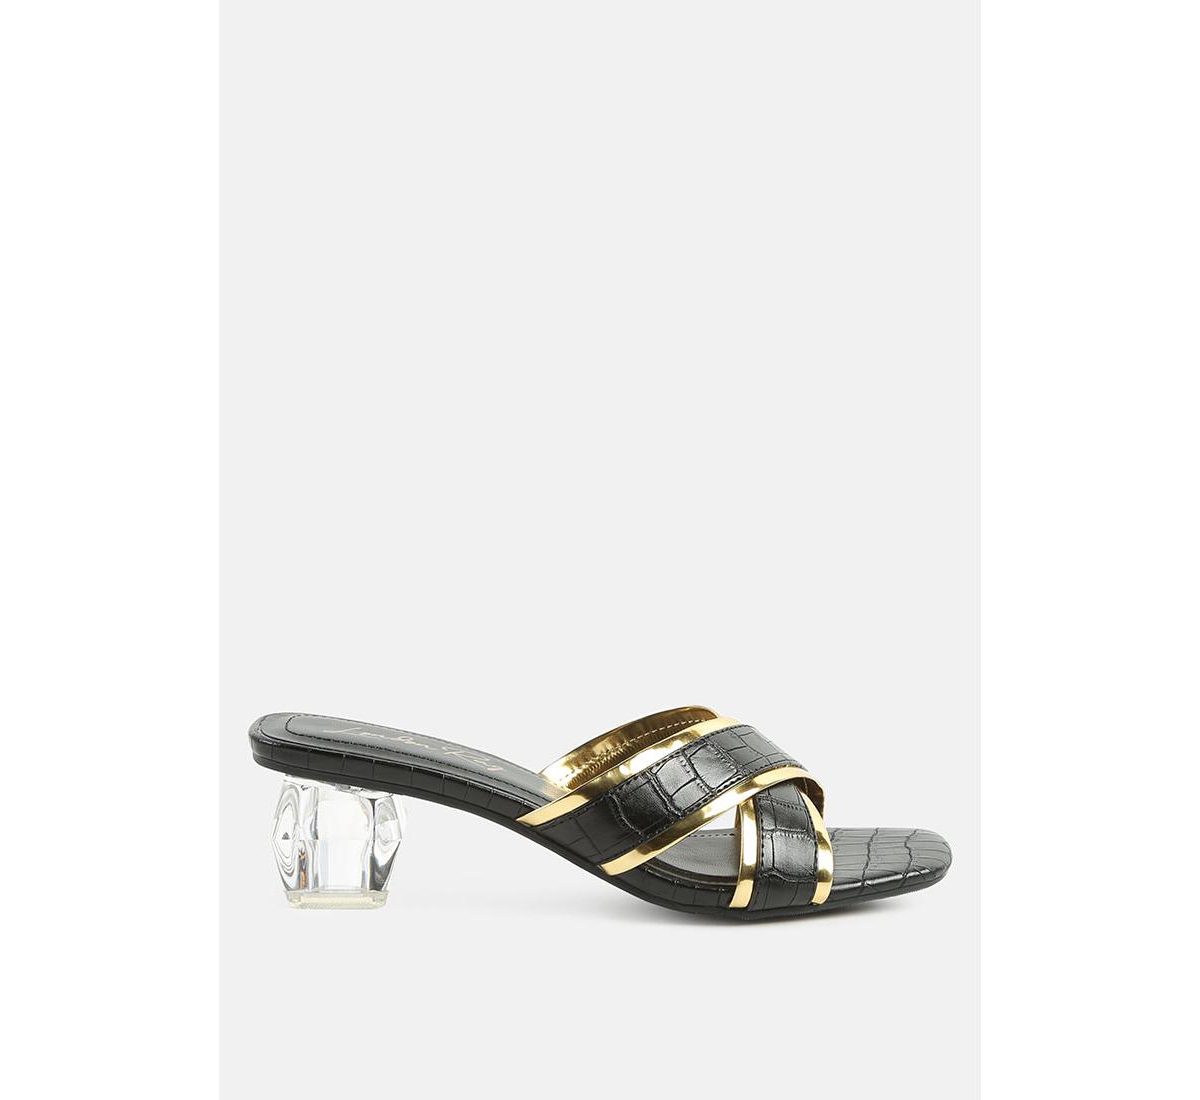 stellar gold line croc sculpted heel sandals - Black